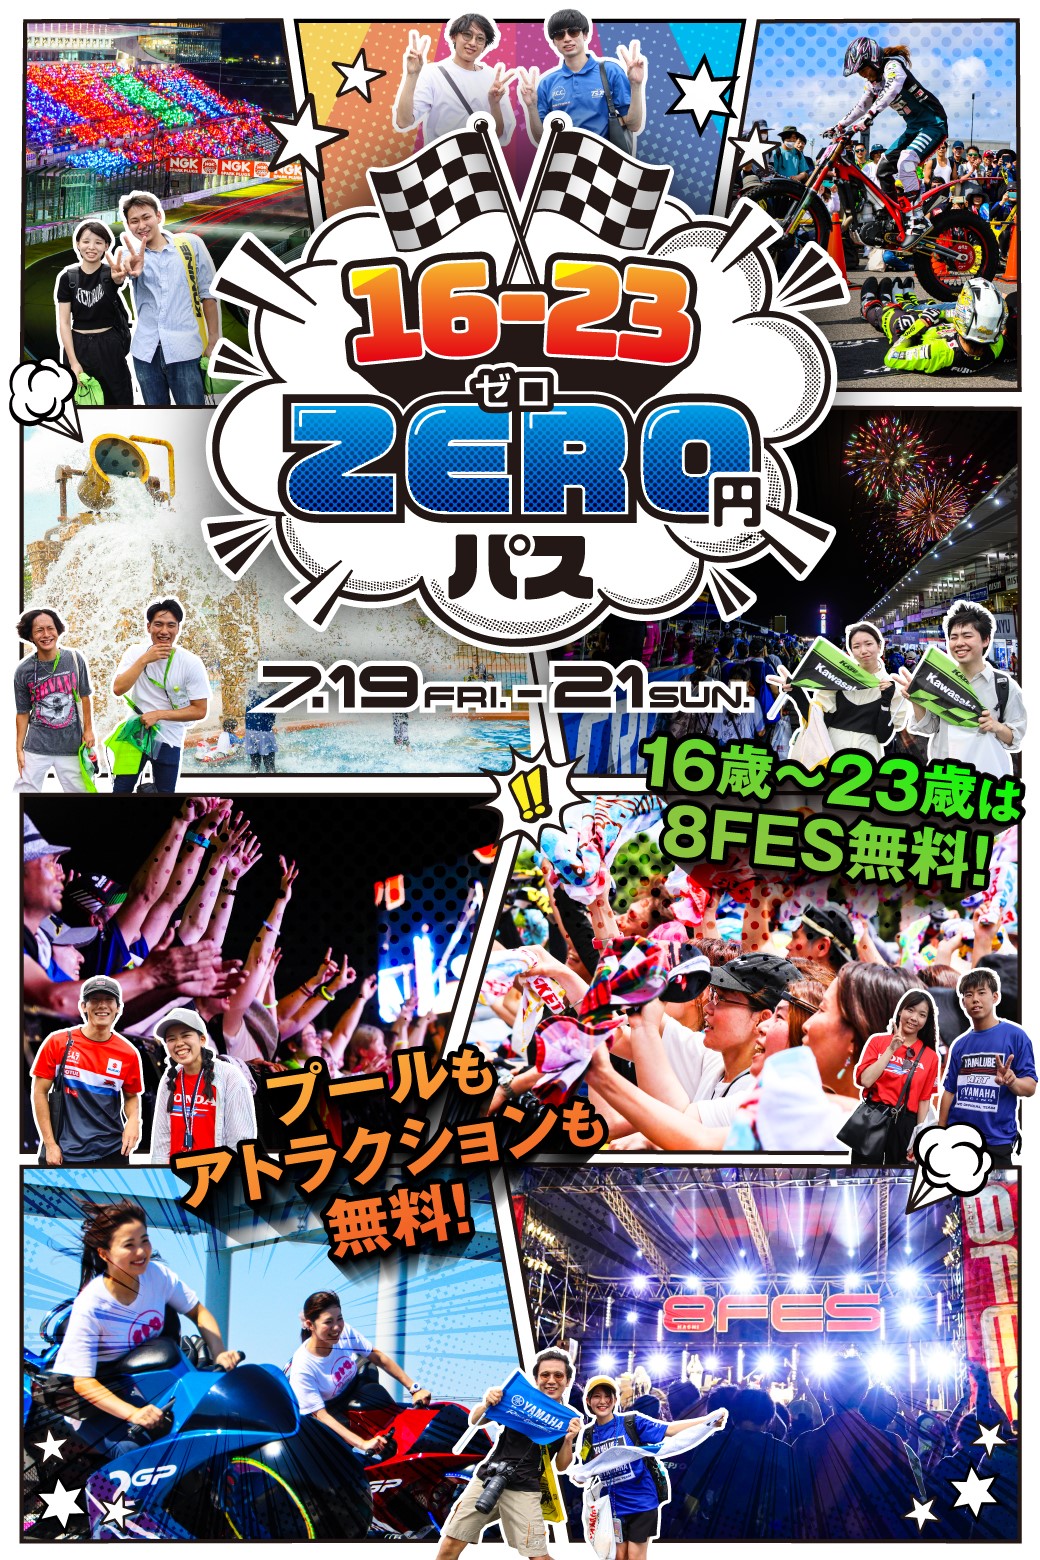 Enjoy free live performances, pool access, and amusement park rides! A miraculous 3-day experience!! "16-23 ZERO yen pass"